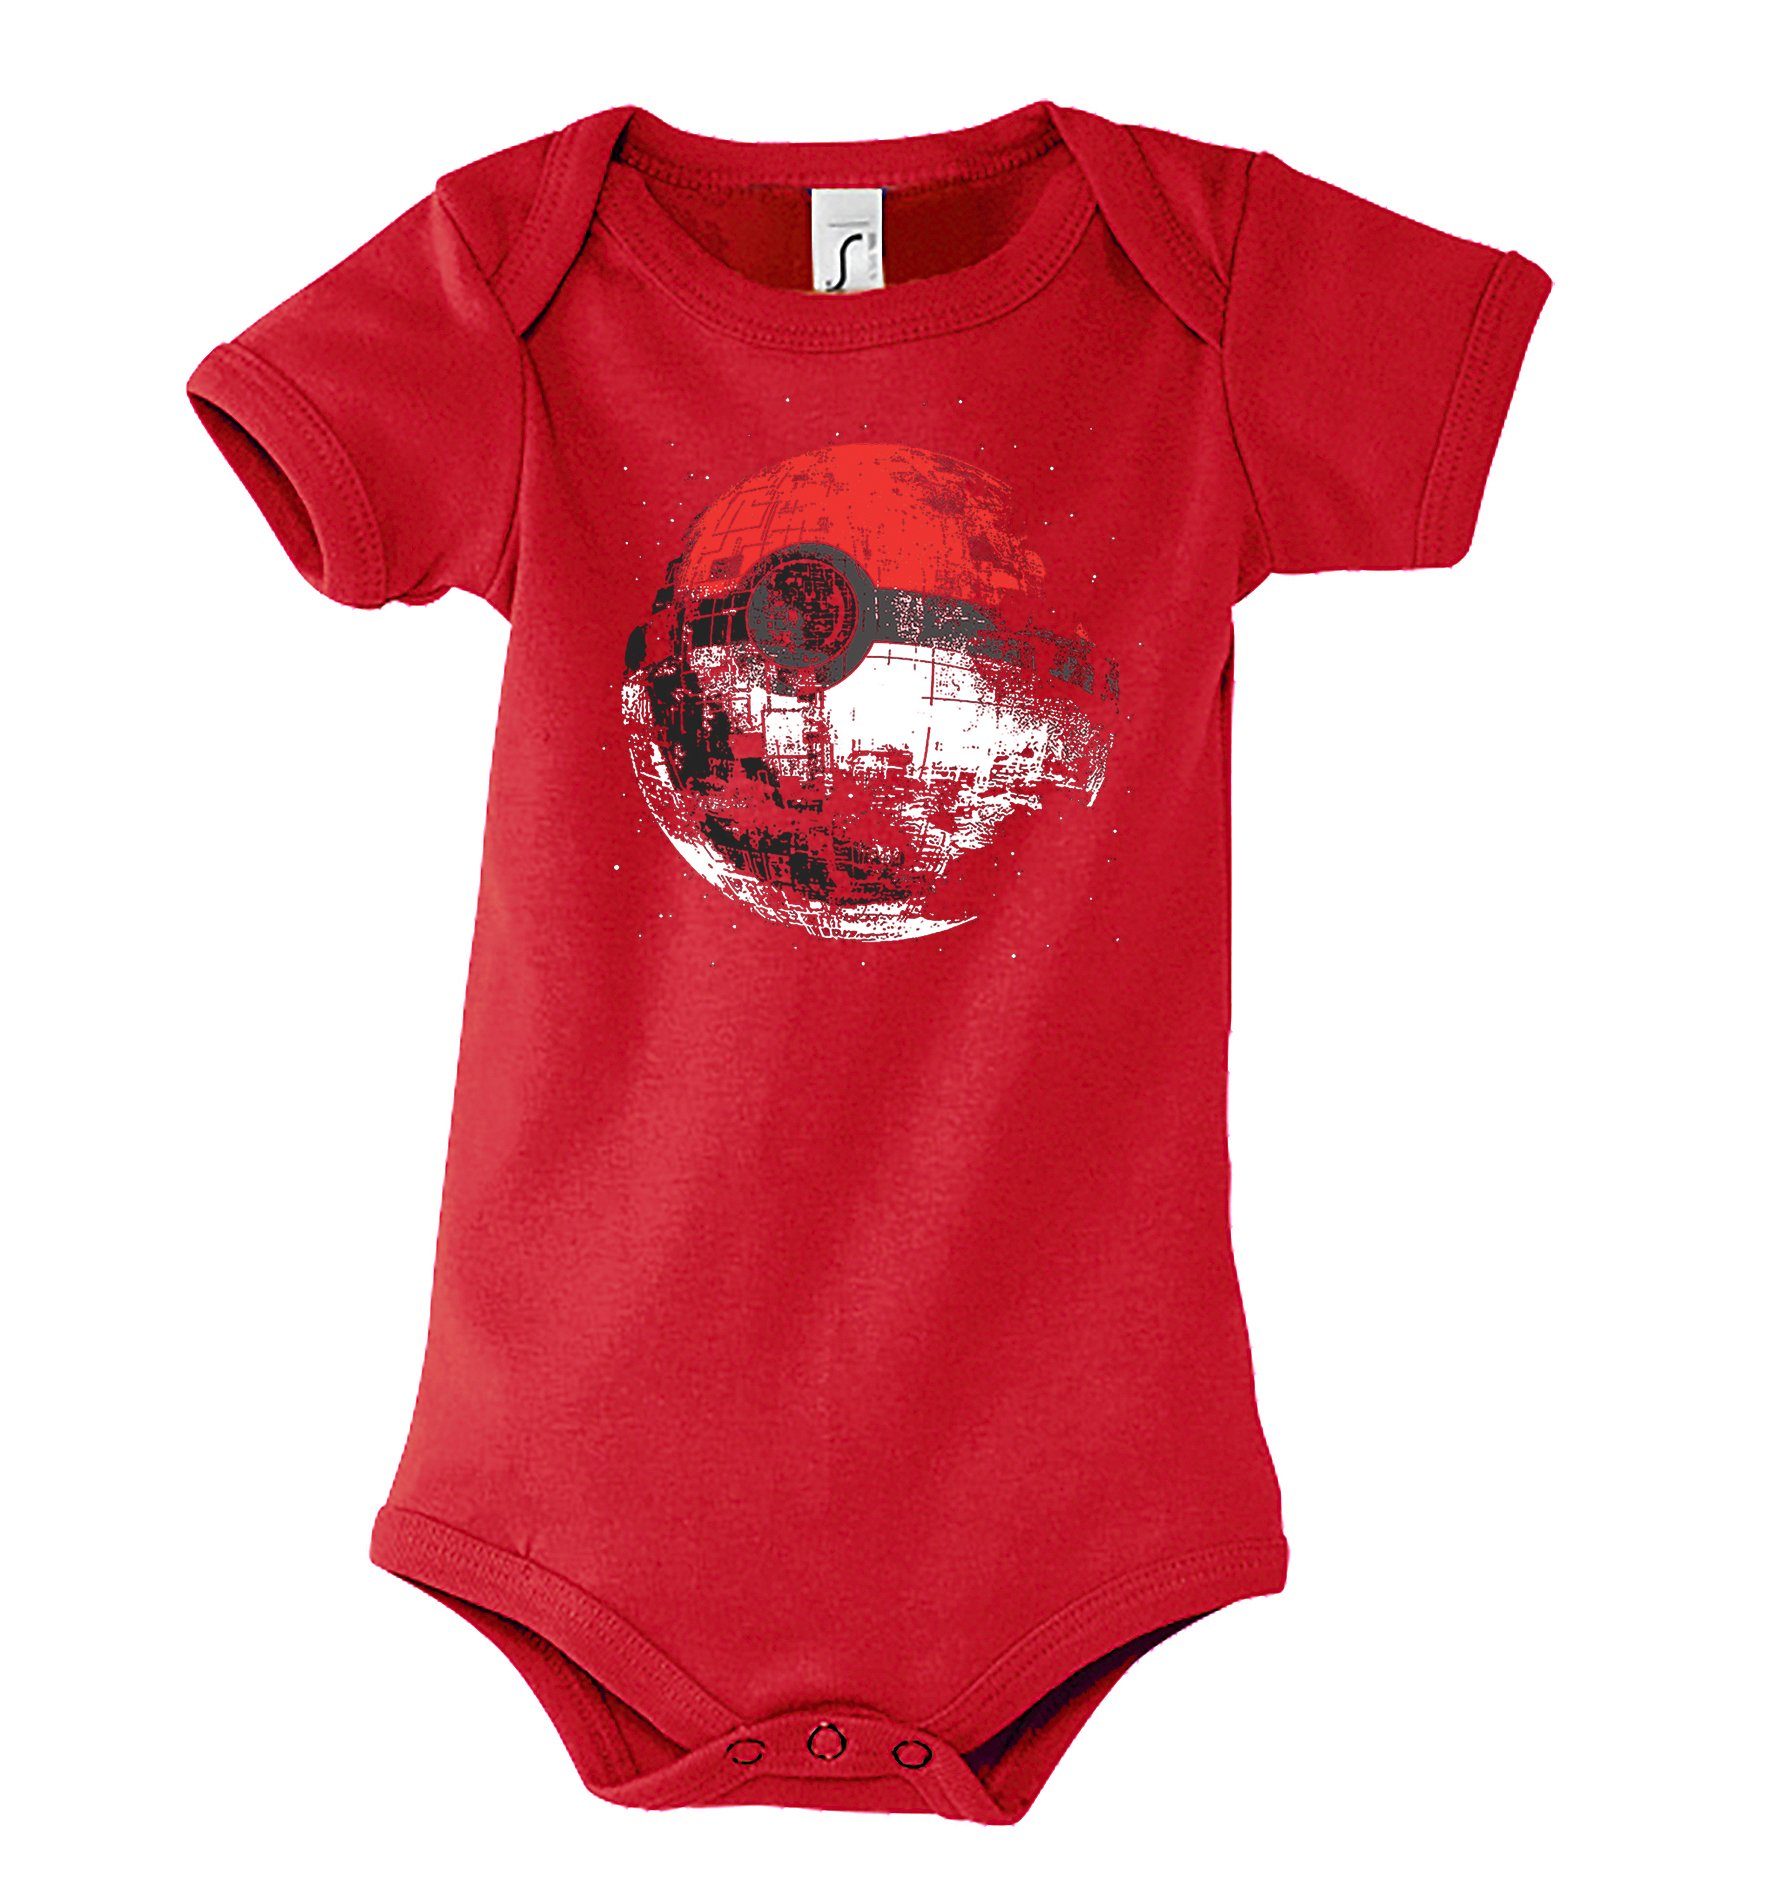 Youth Designz Kurzarmbody Poke Stern Ball Baby Strampler Body in tollem Design, mit Frontdruck Rot